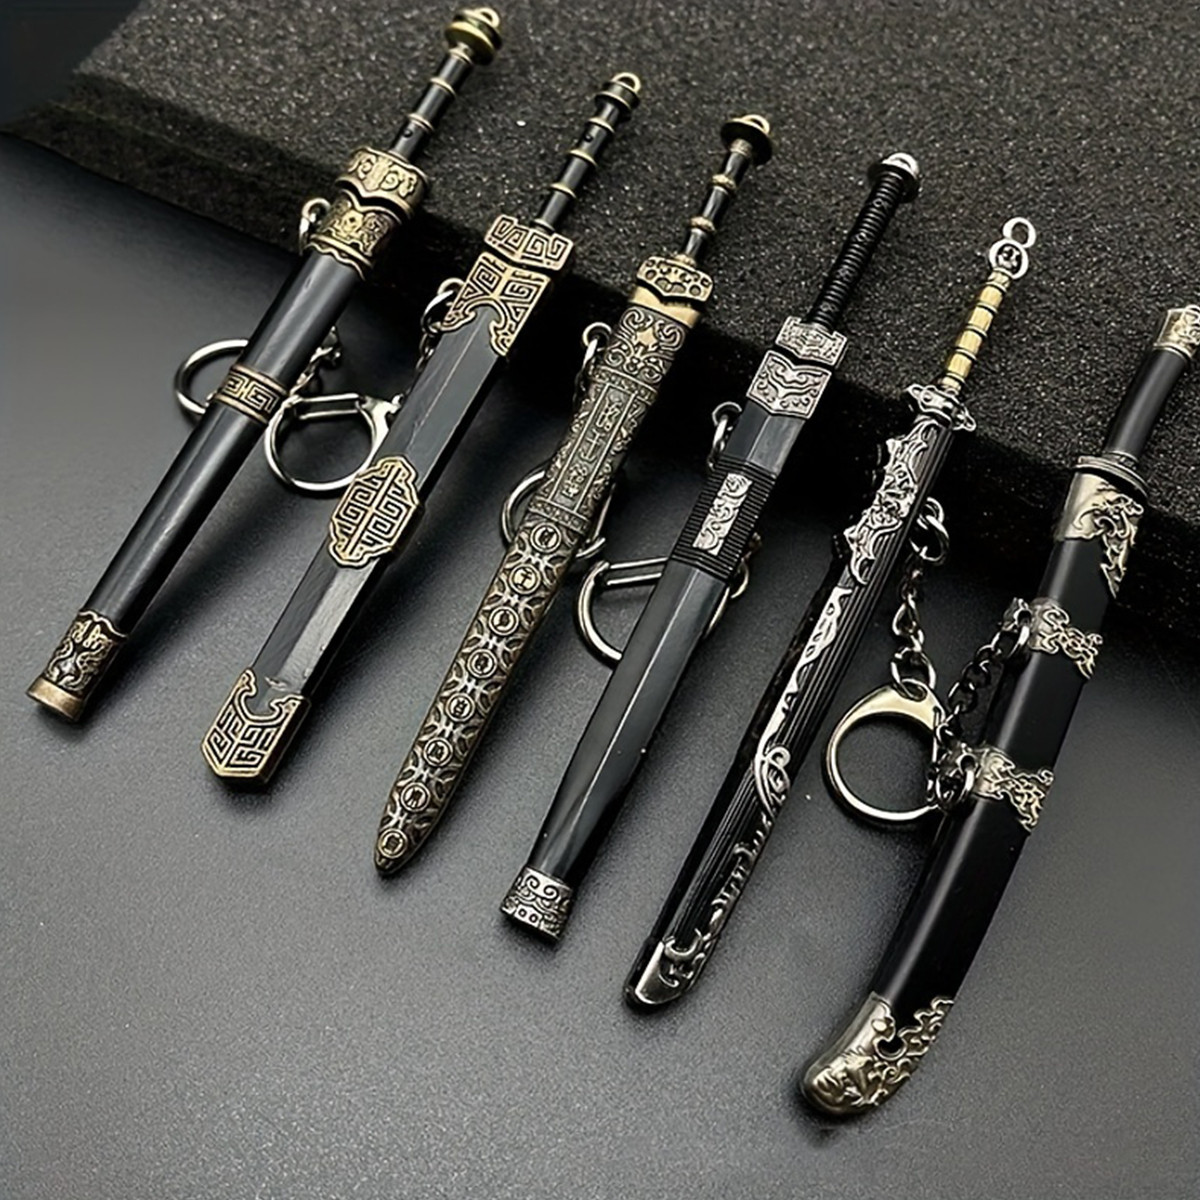 Tongs-Shop Men Creative Sword Weapon Toy Pendant Keychain Accessories